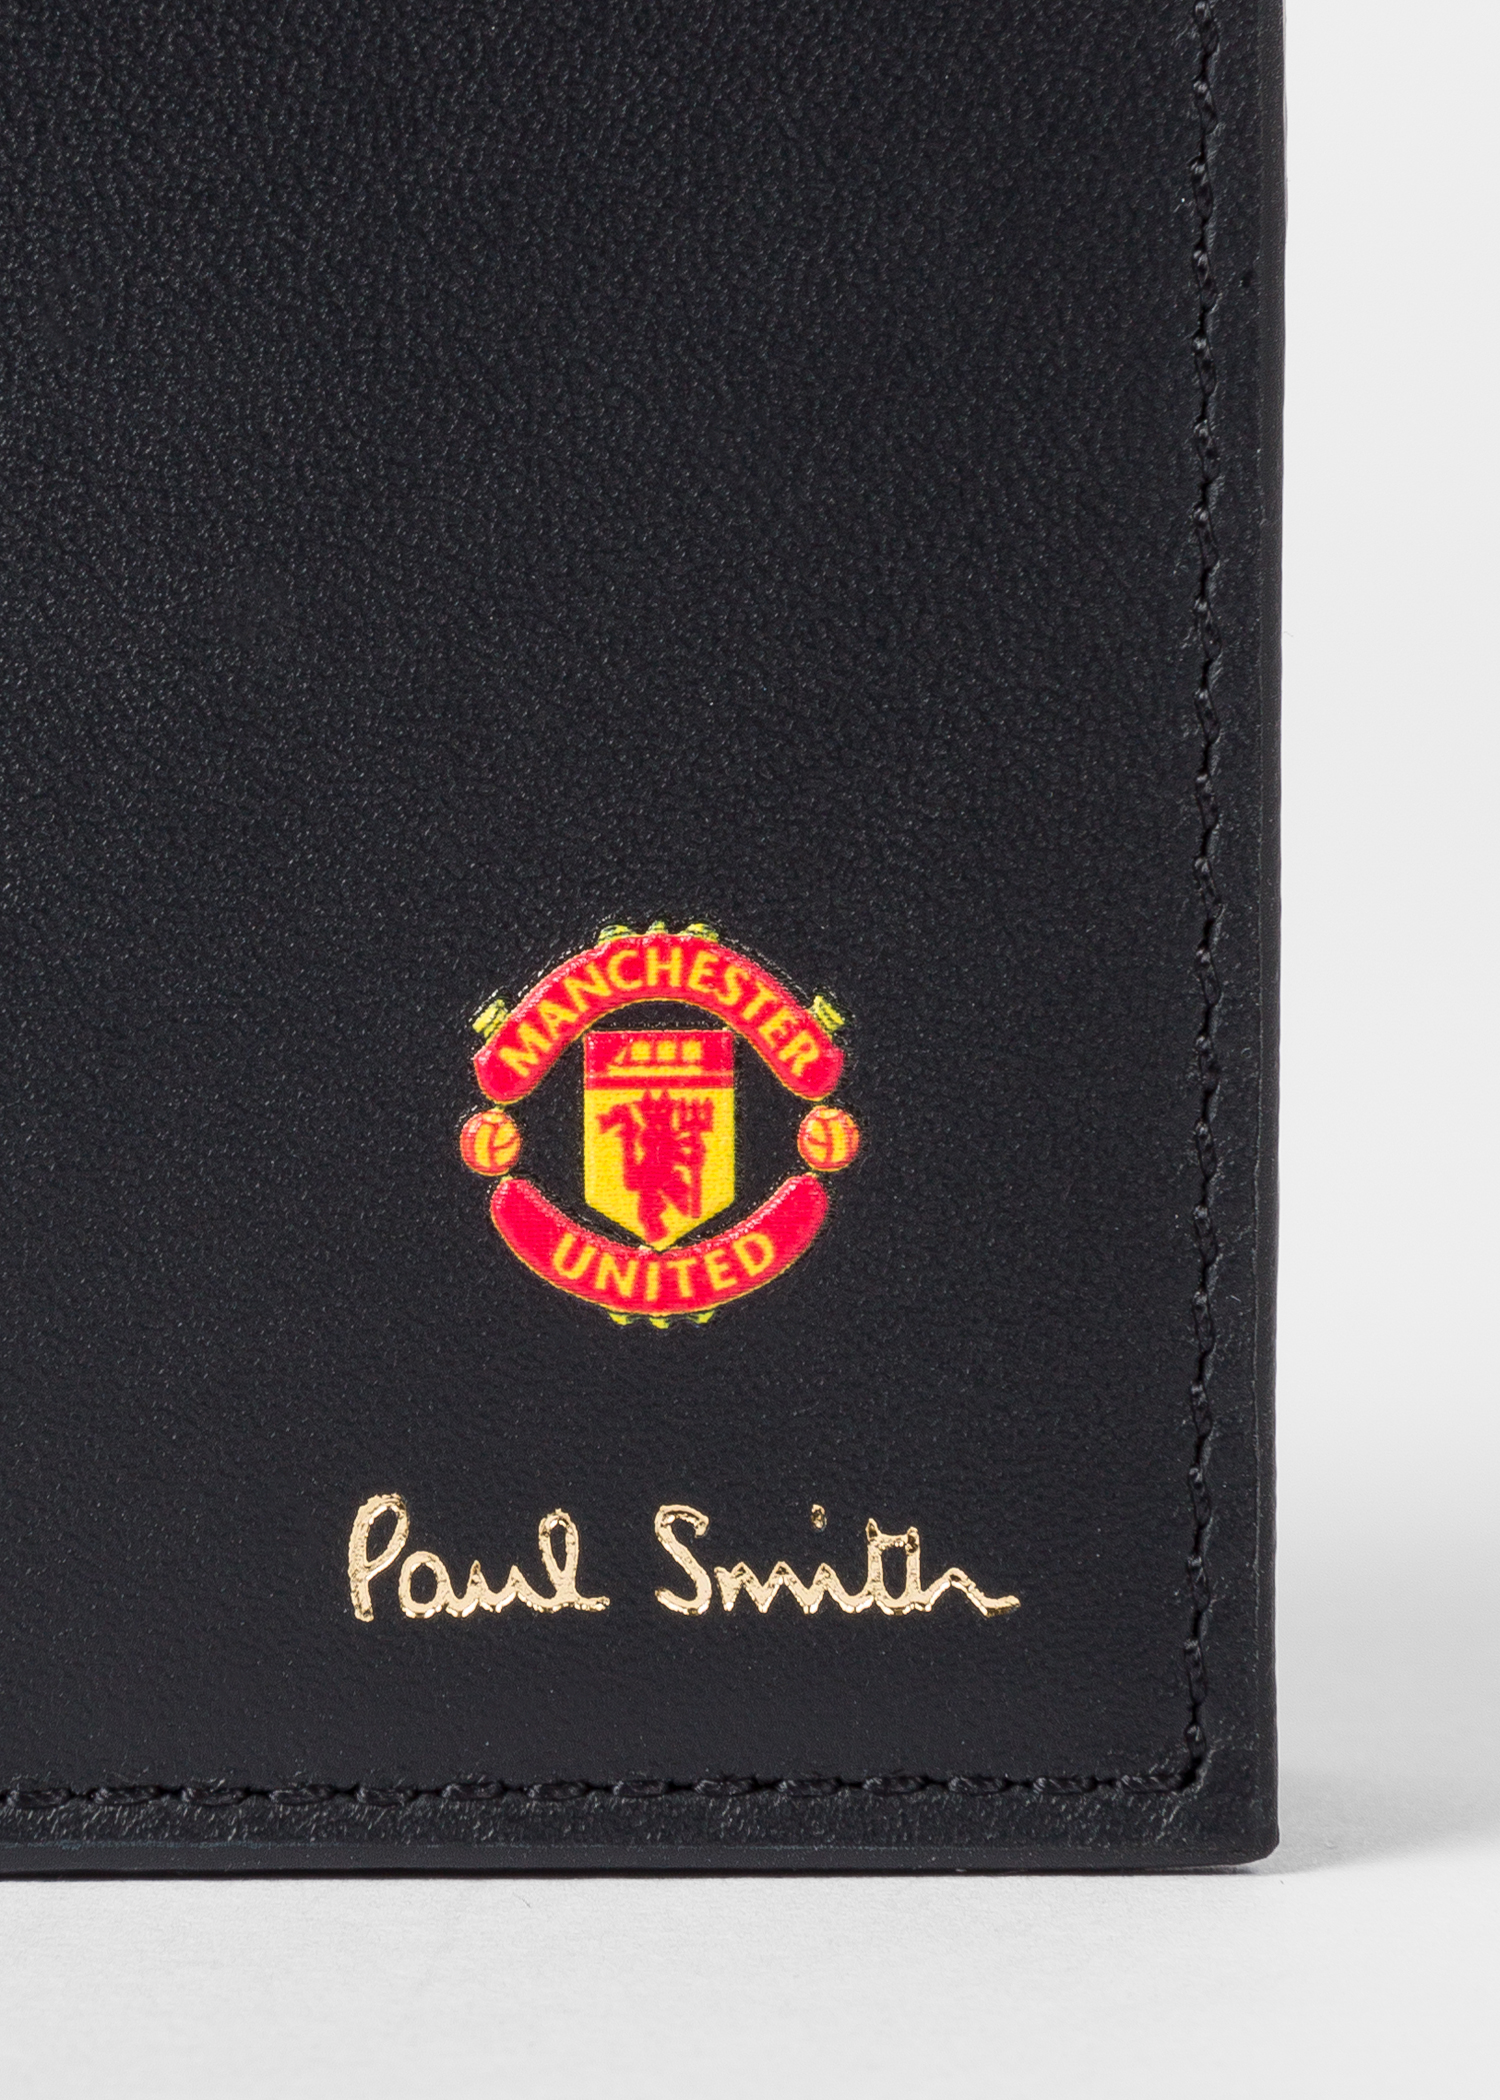 Paul Smith & Manchester United ‘Stadium’ Print Interior Billfold Wallet